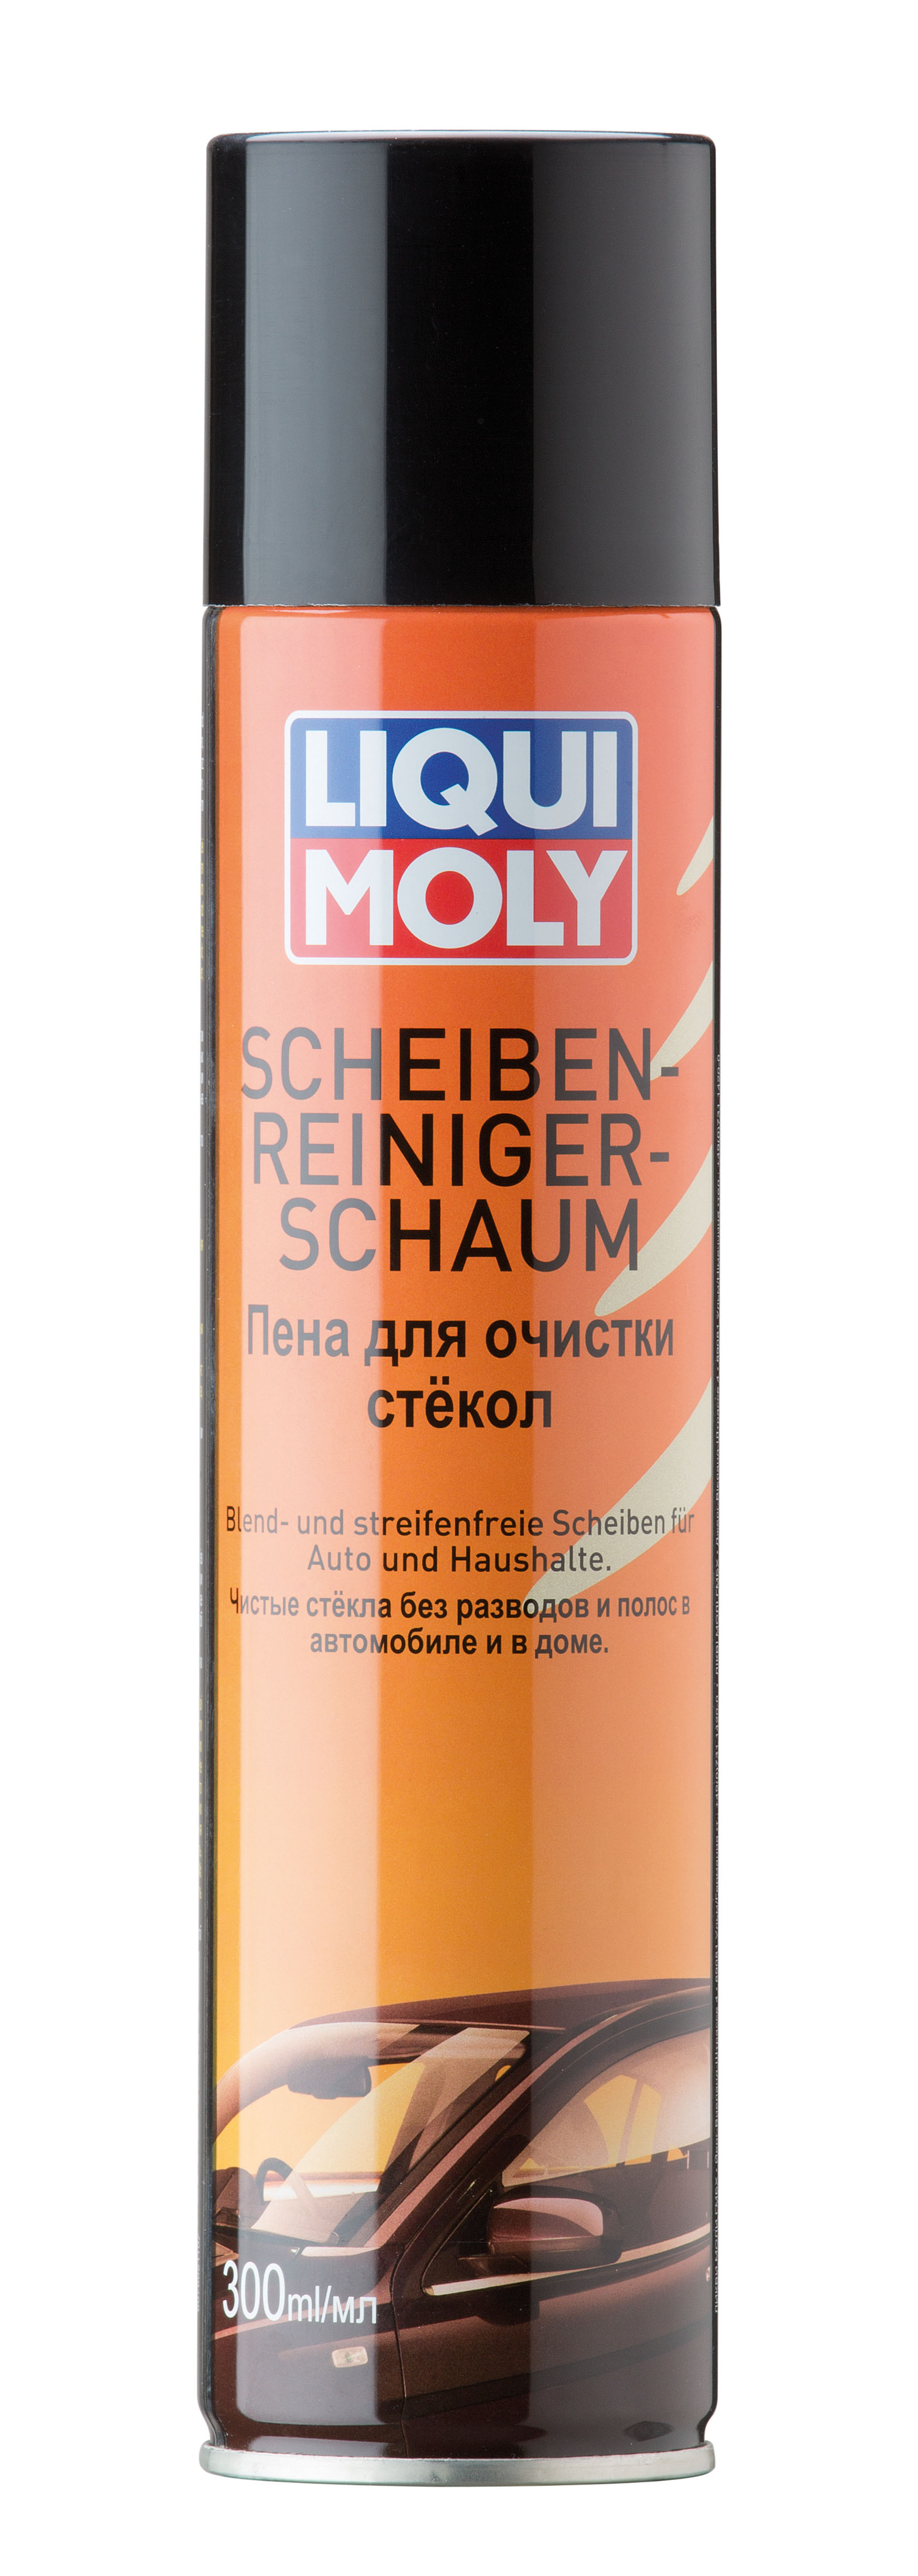 Пена для очистки стекол Scheiben-Rein.-Schaum, 300мл - Liqui Moly 7602